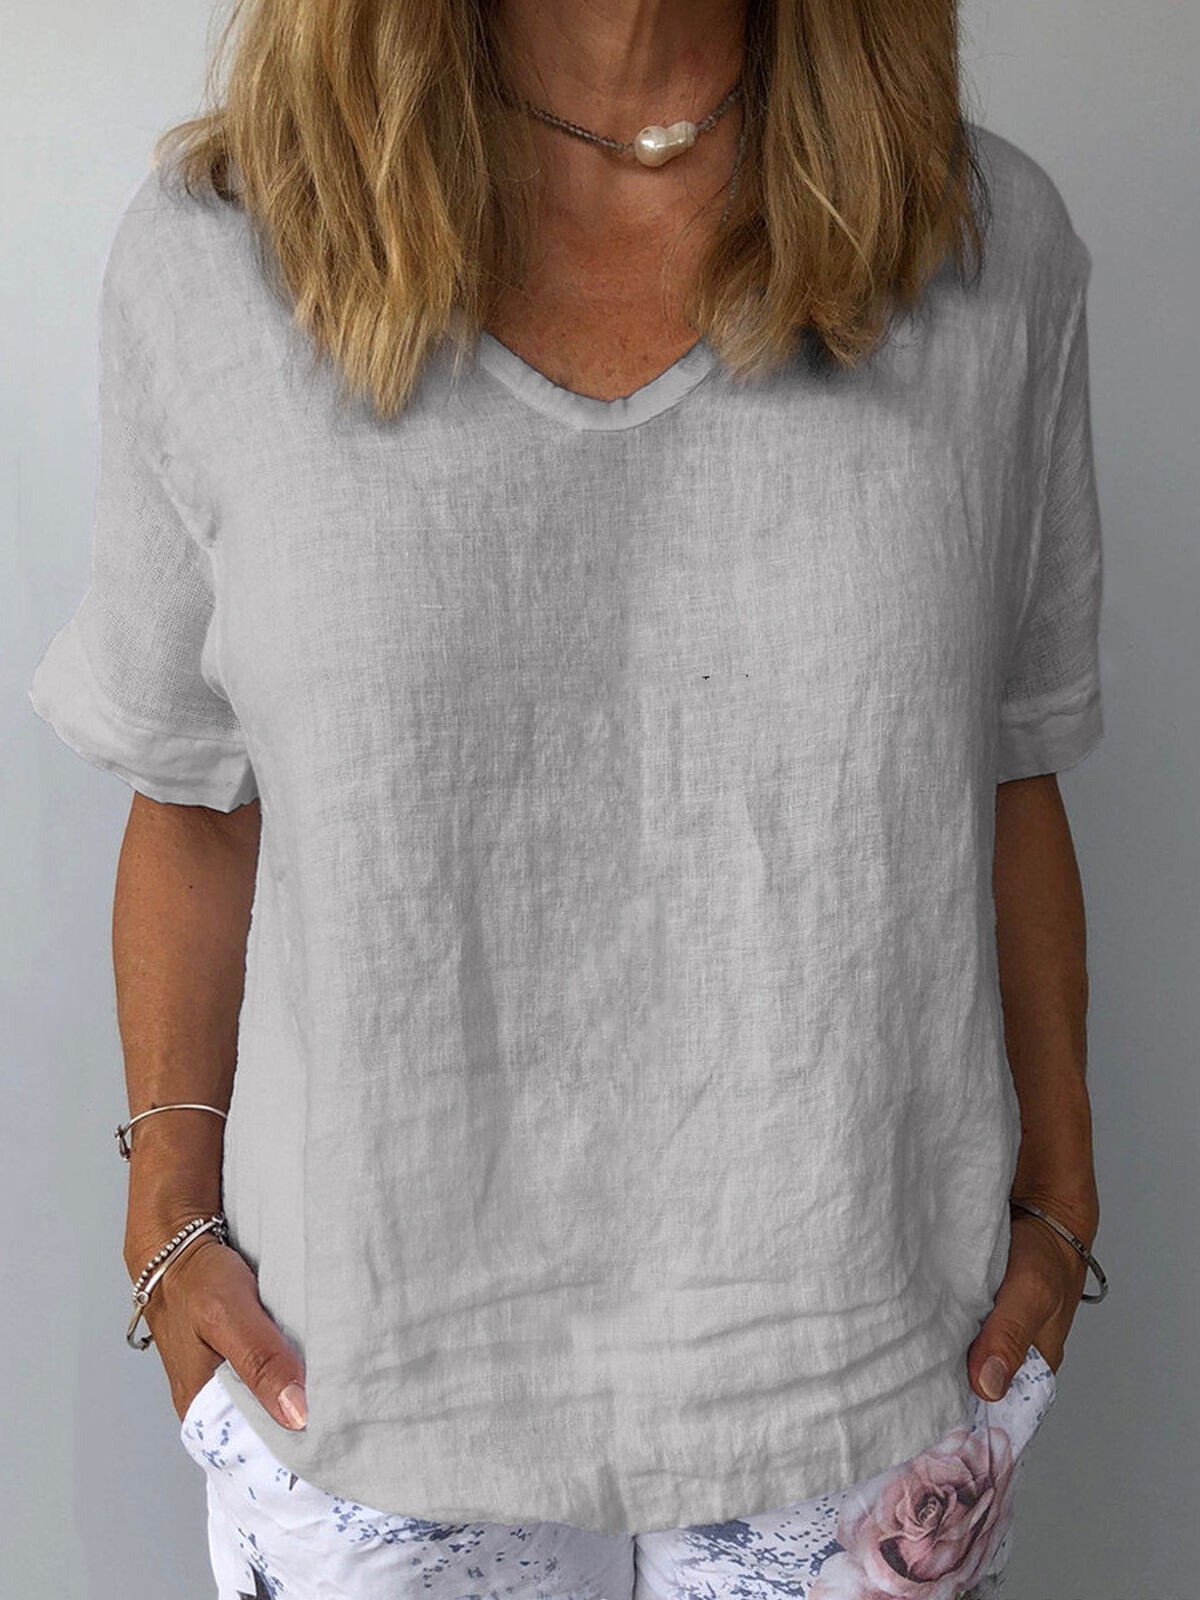 NTG Fad Grey / S Women's Pure Color Casual Cotton Shirt